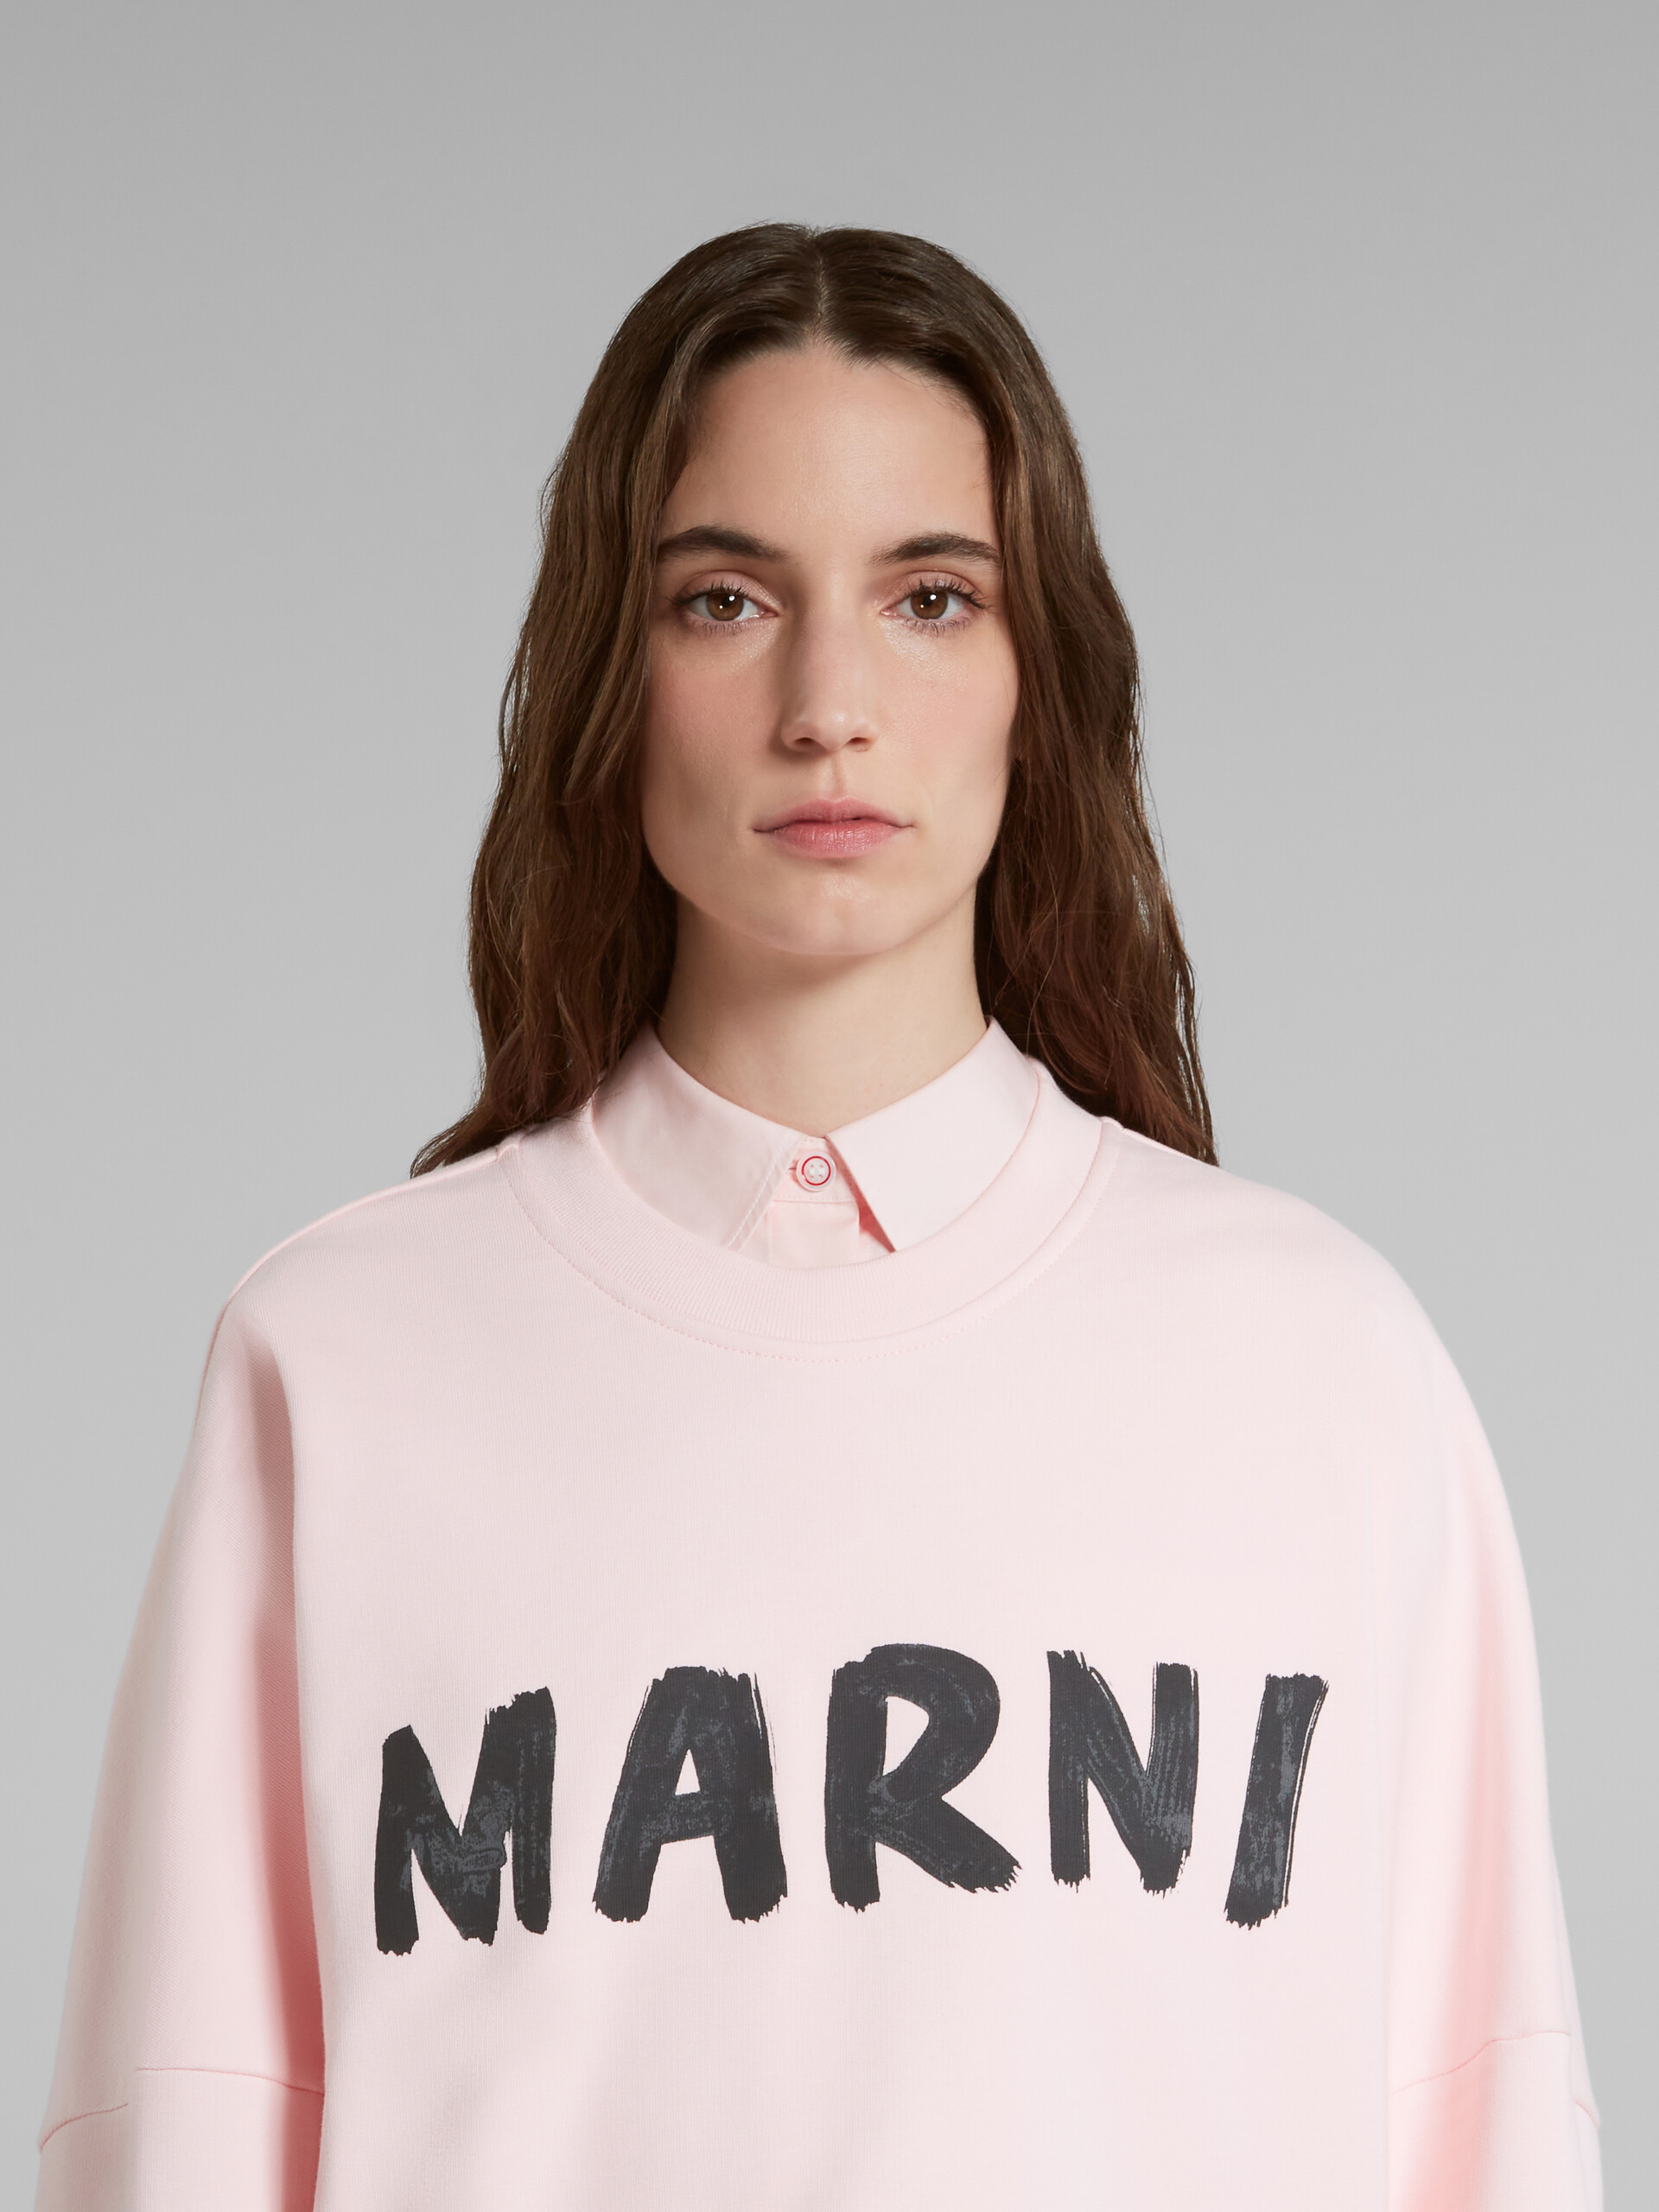 Blue organic cotton sweatshirt with Marni print - Pullovers - Image 4